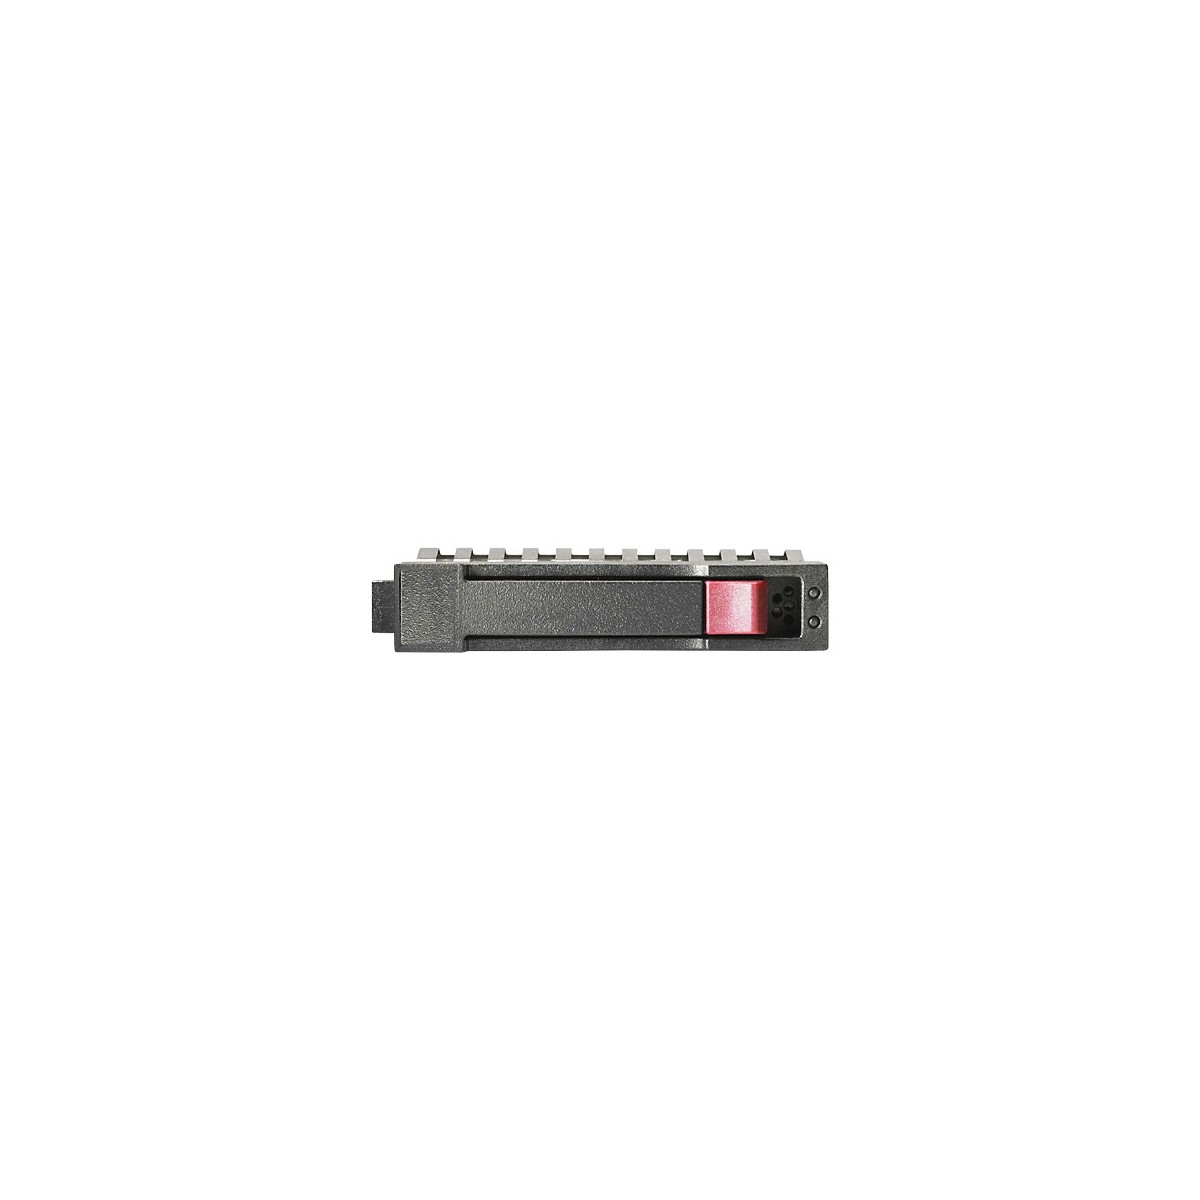 HPE MSA 600GB 12G SAS 15K LFF (3.5in) Converter Enterprise 3yr Warranty Hard Drive - 3.5 - 600 GB - 15000 RPM